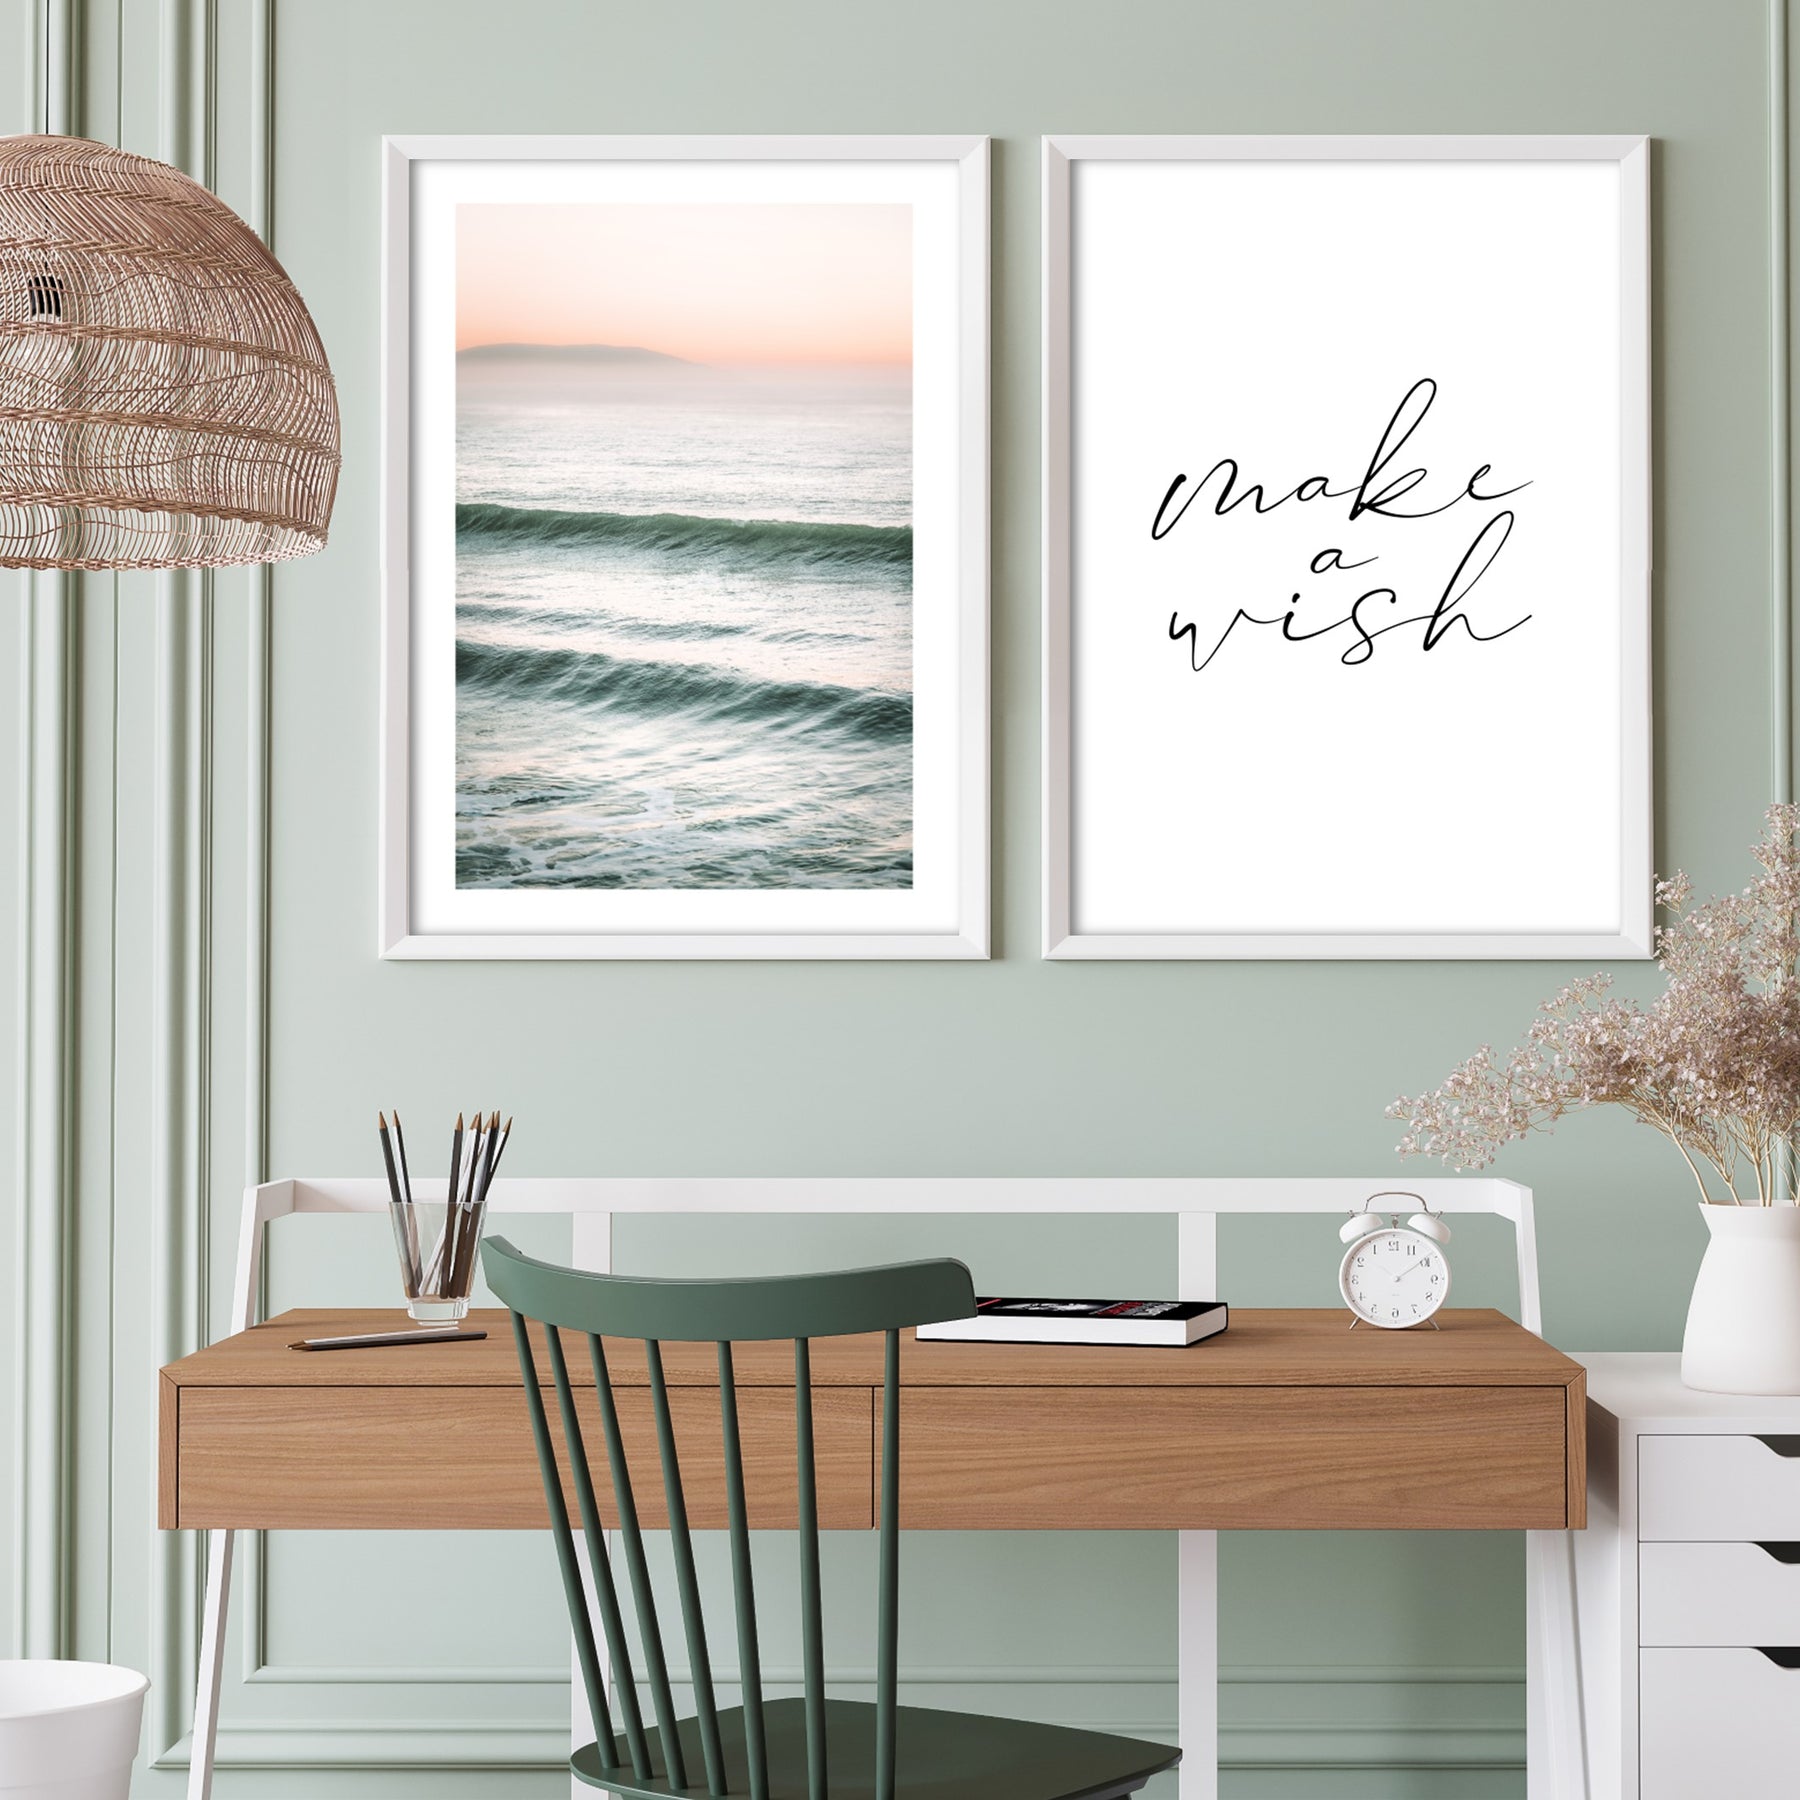 Make A – My Wish Poster Print Slay